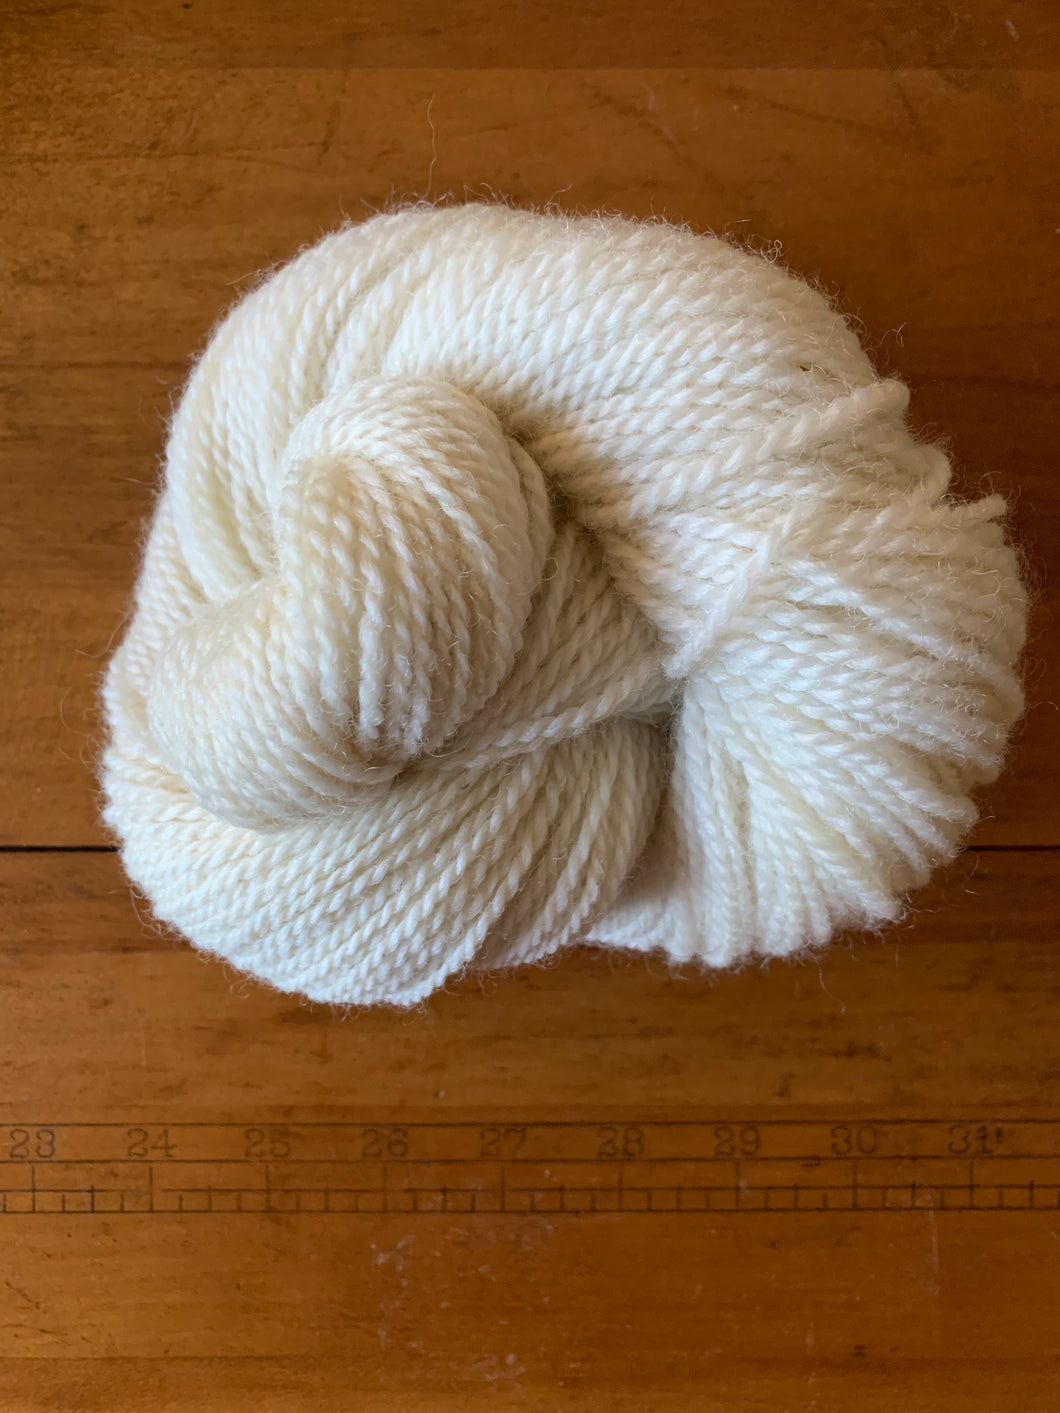 A skein of white Romney yarn